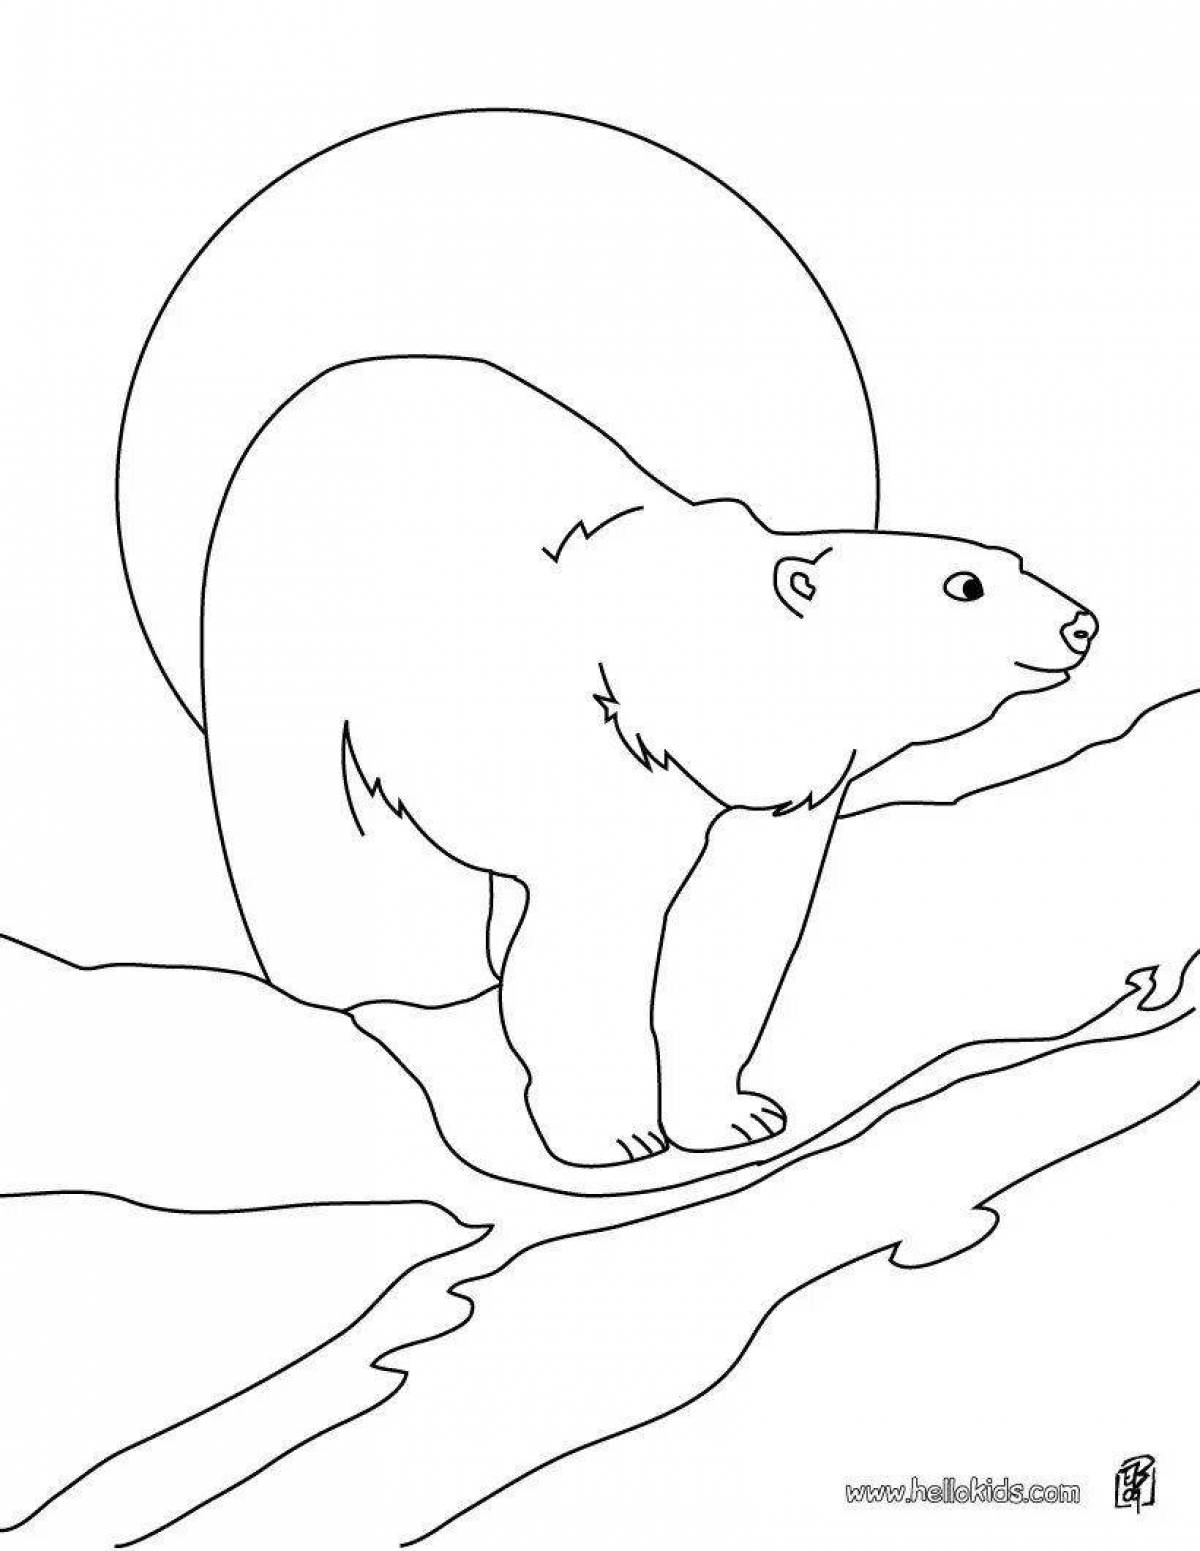 Cozy polar bear coloring page